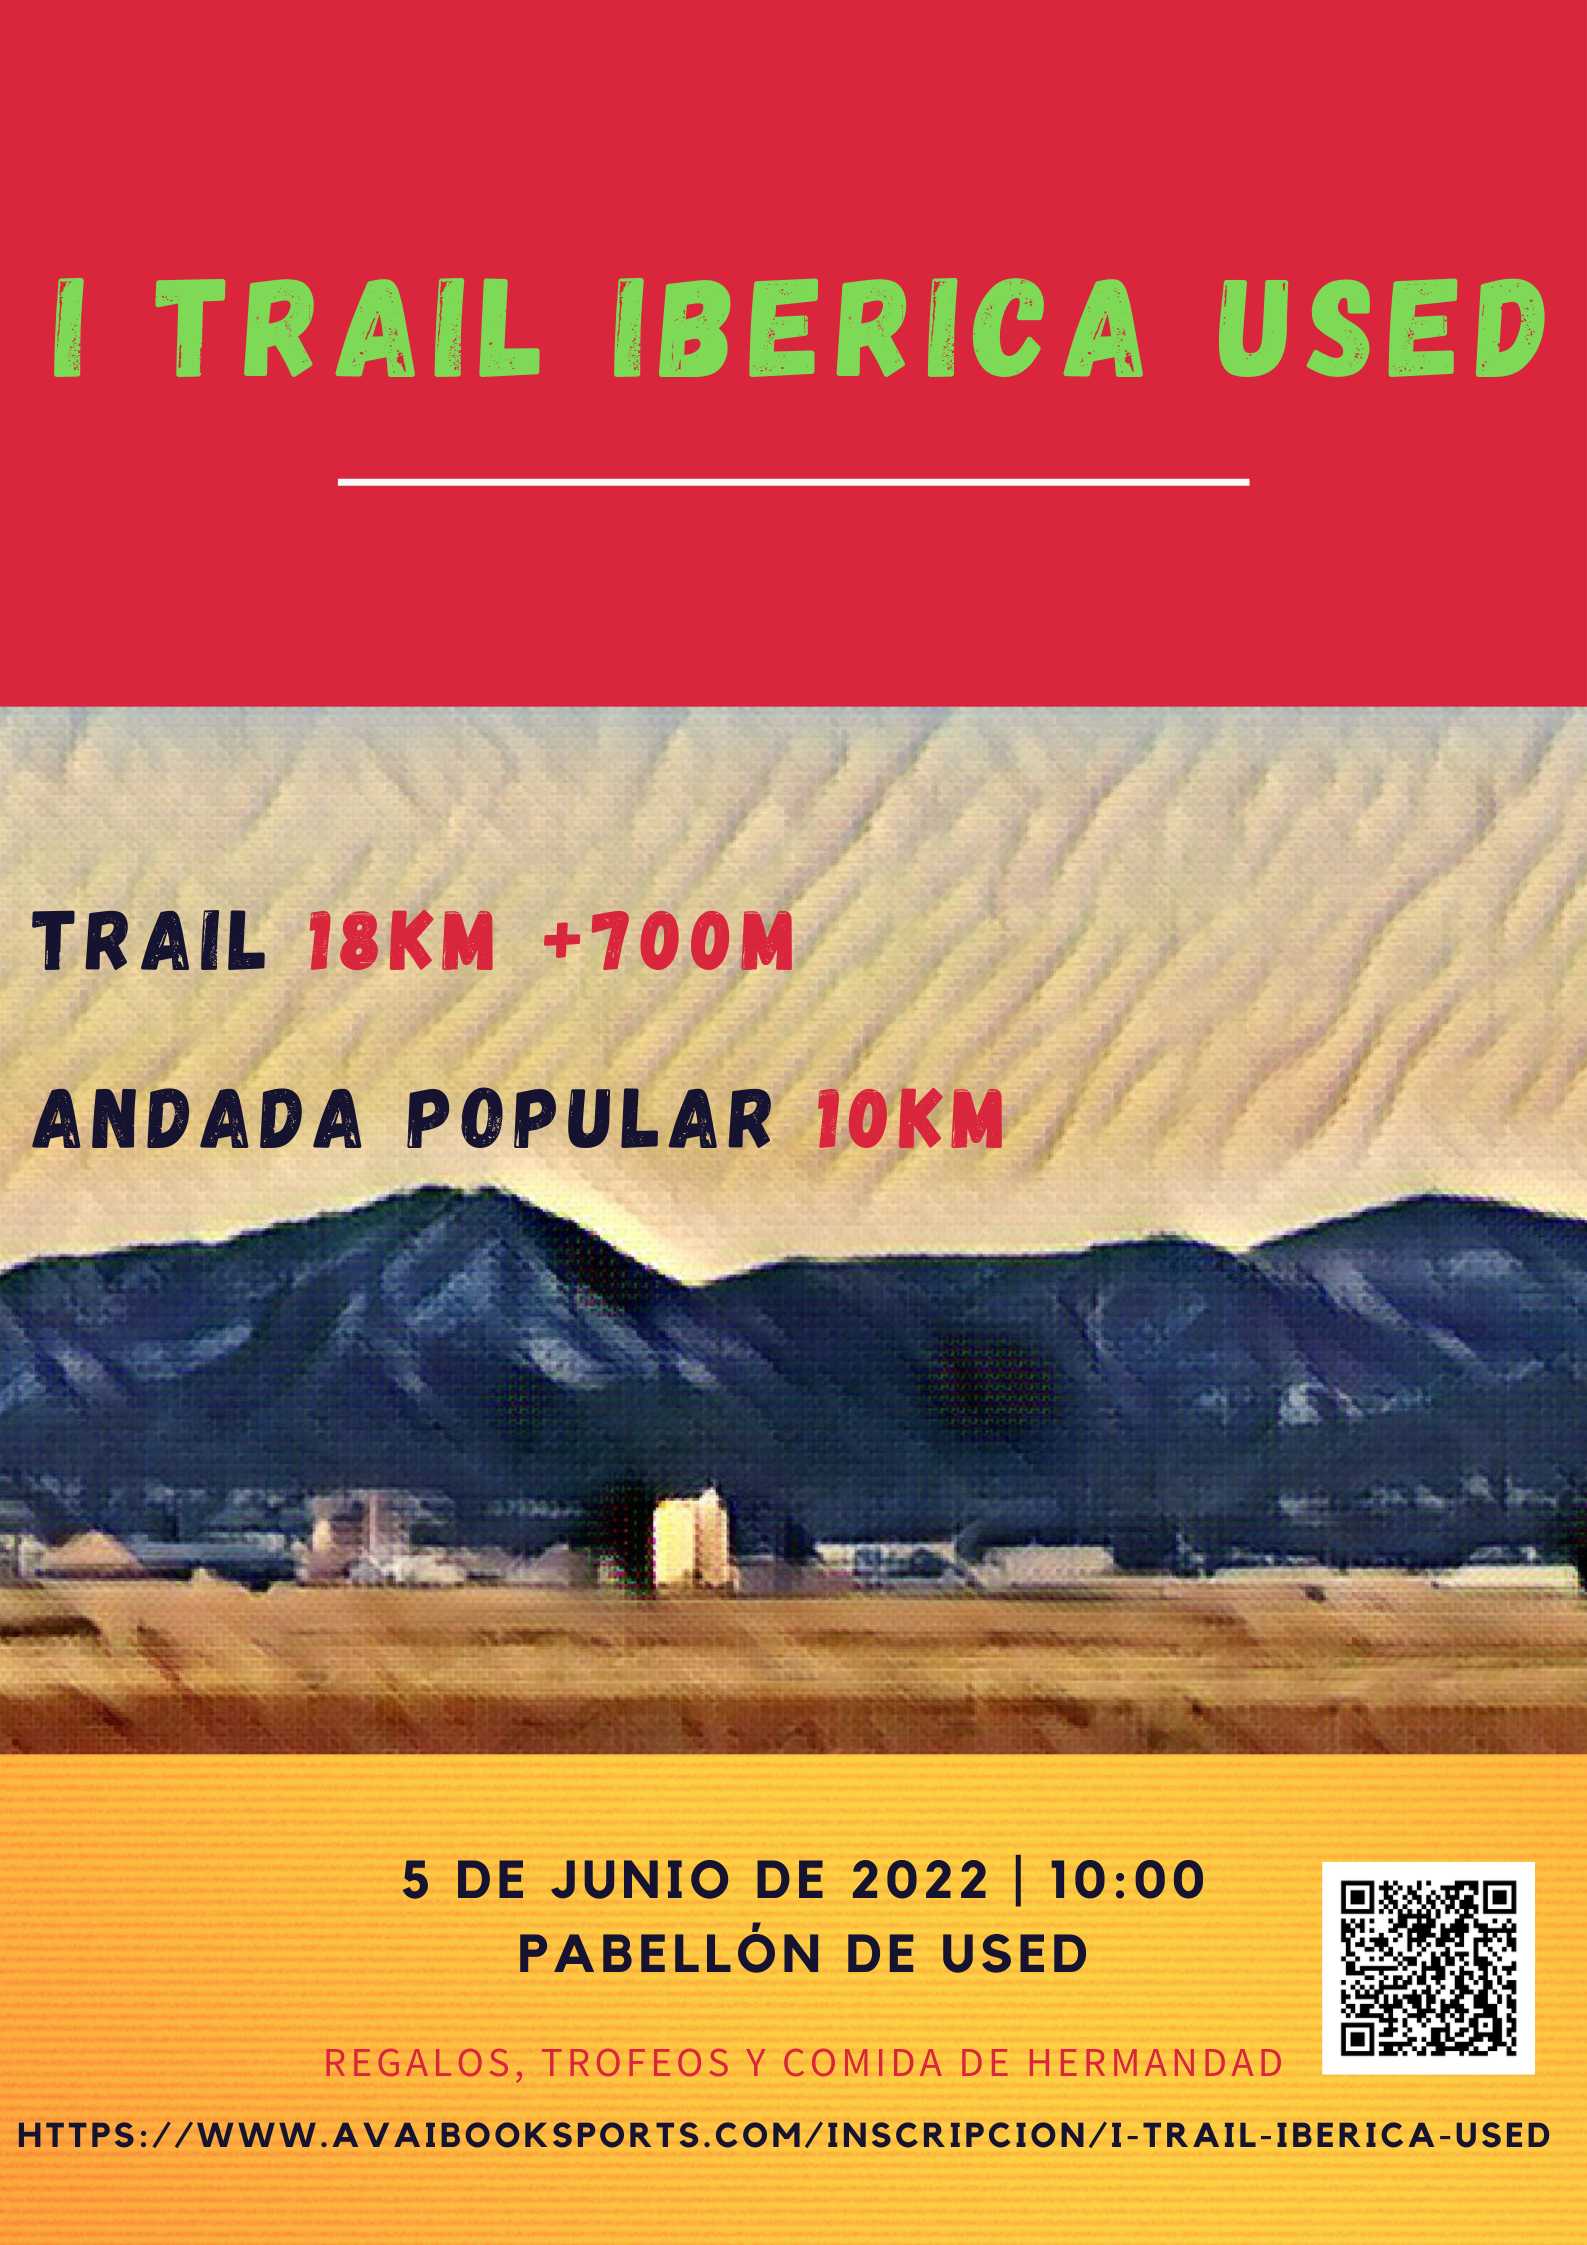 I TRAIL IBERICA USED - Register